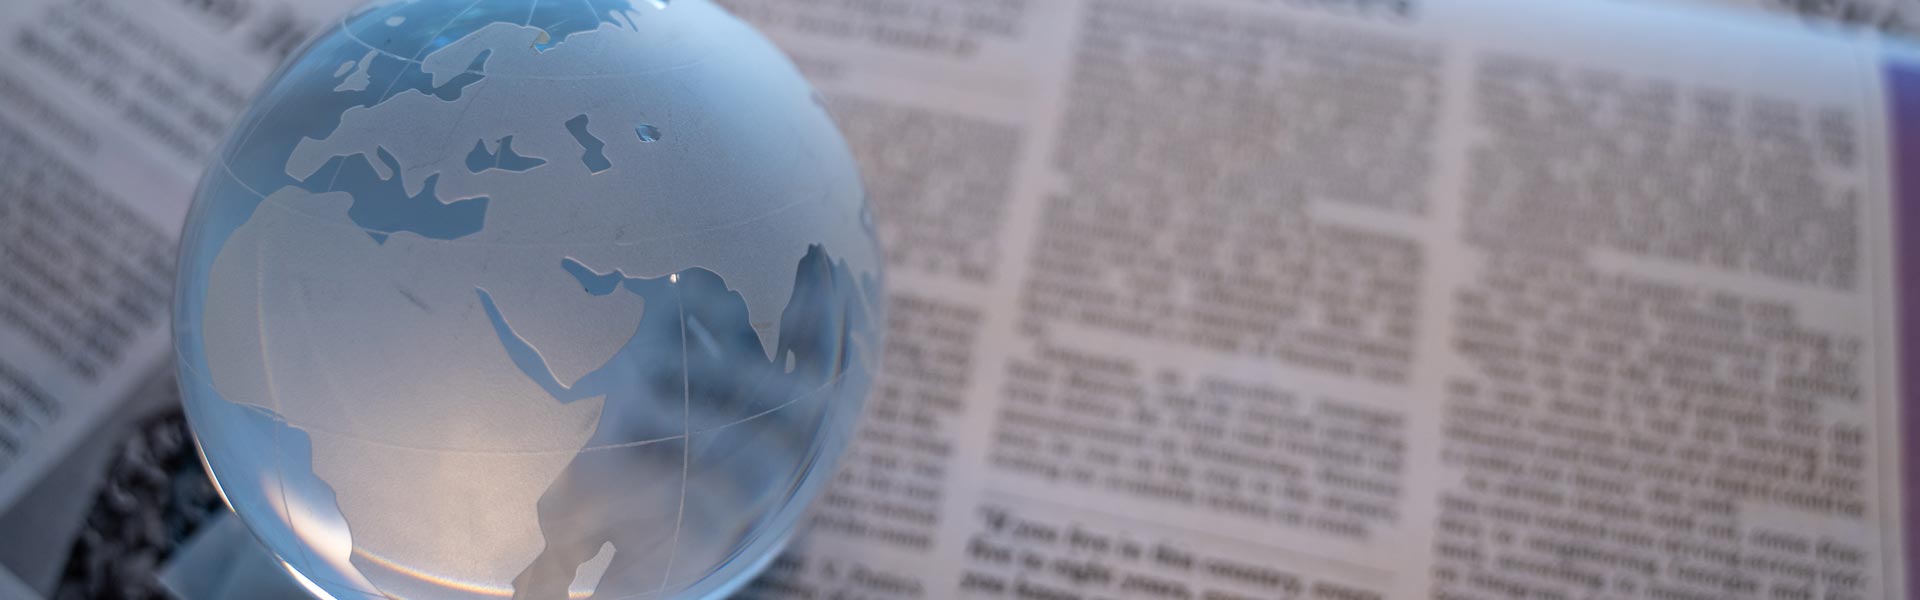 Glass globe and newspaper